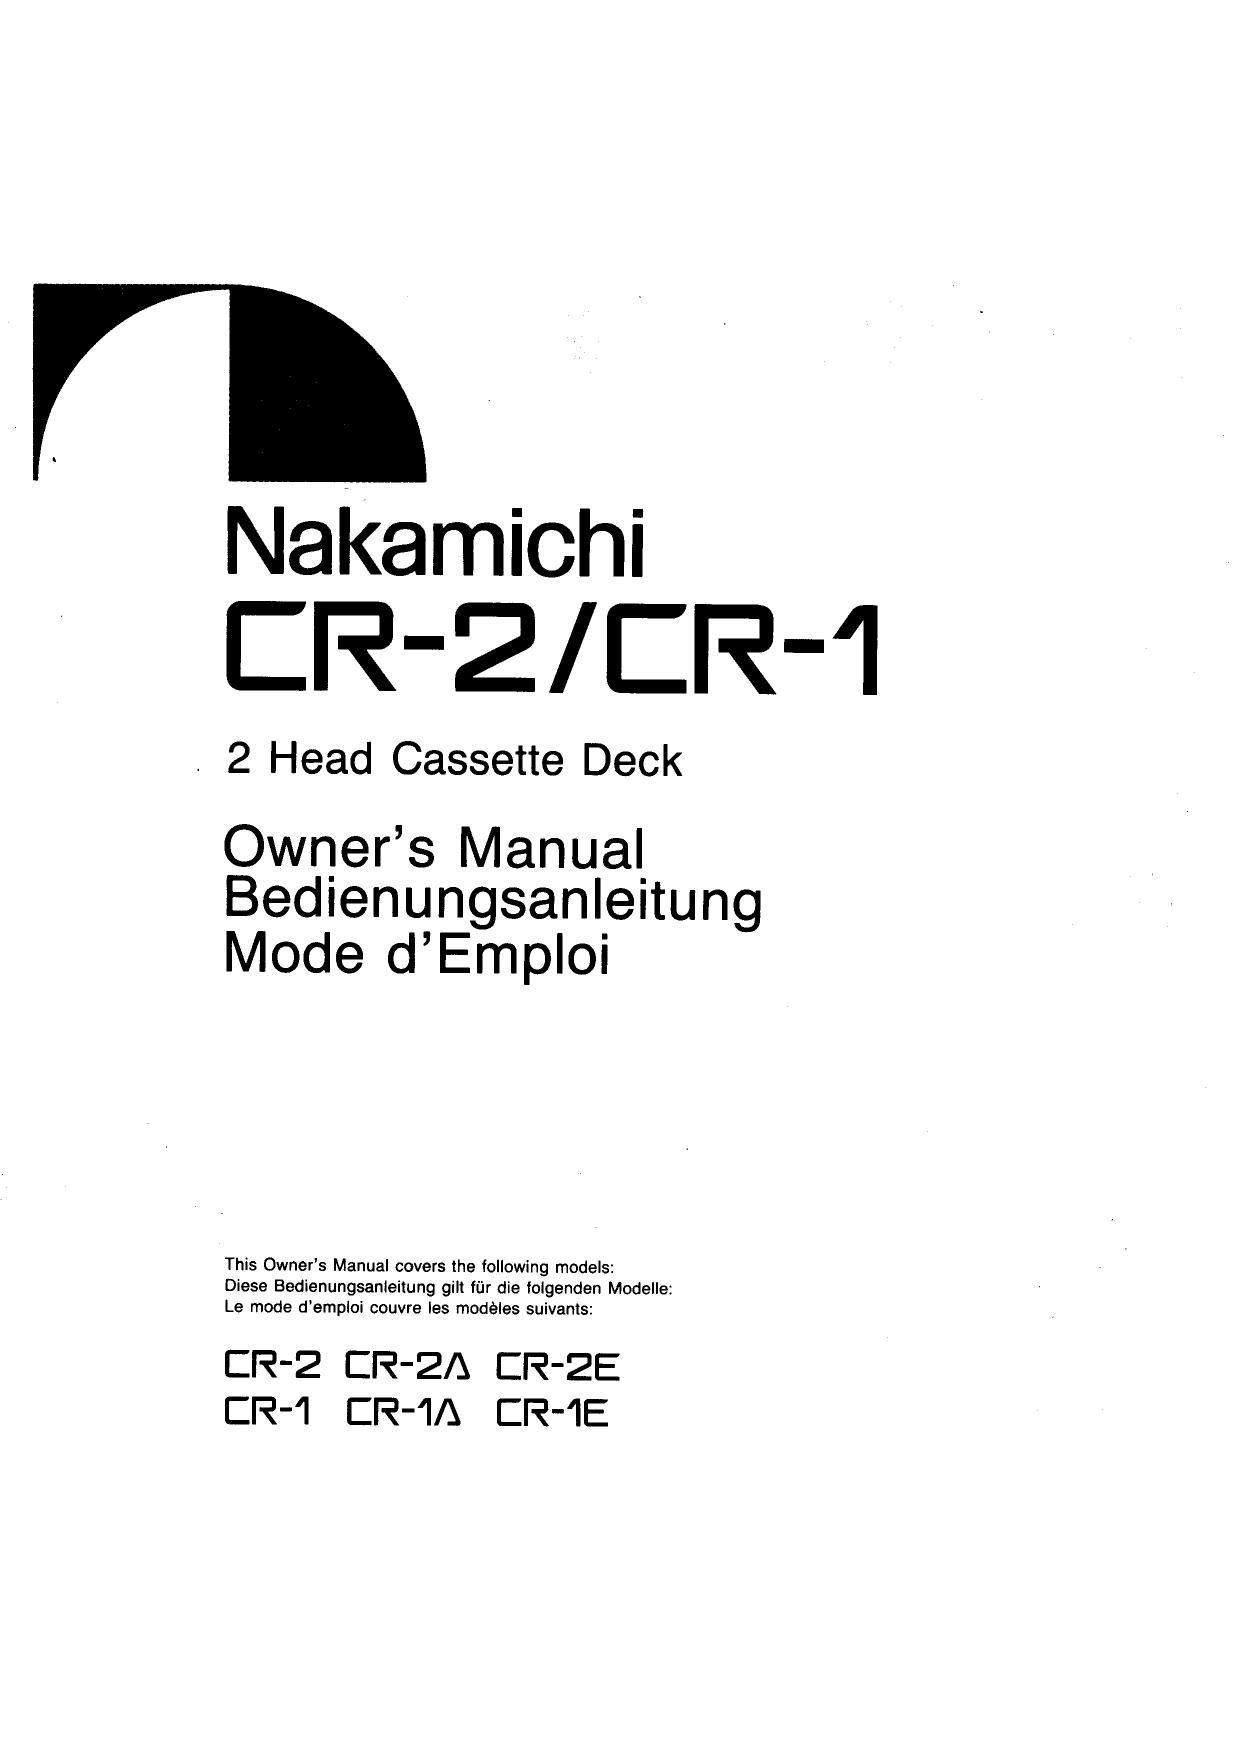 Nakamichi CR 1 E Owners Manual